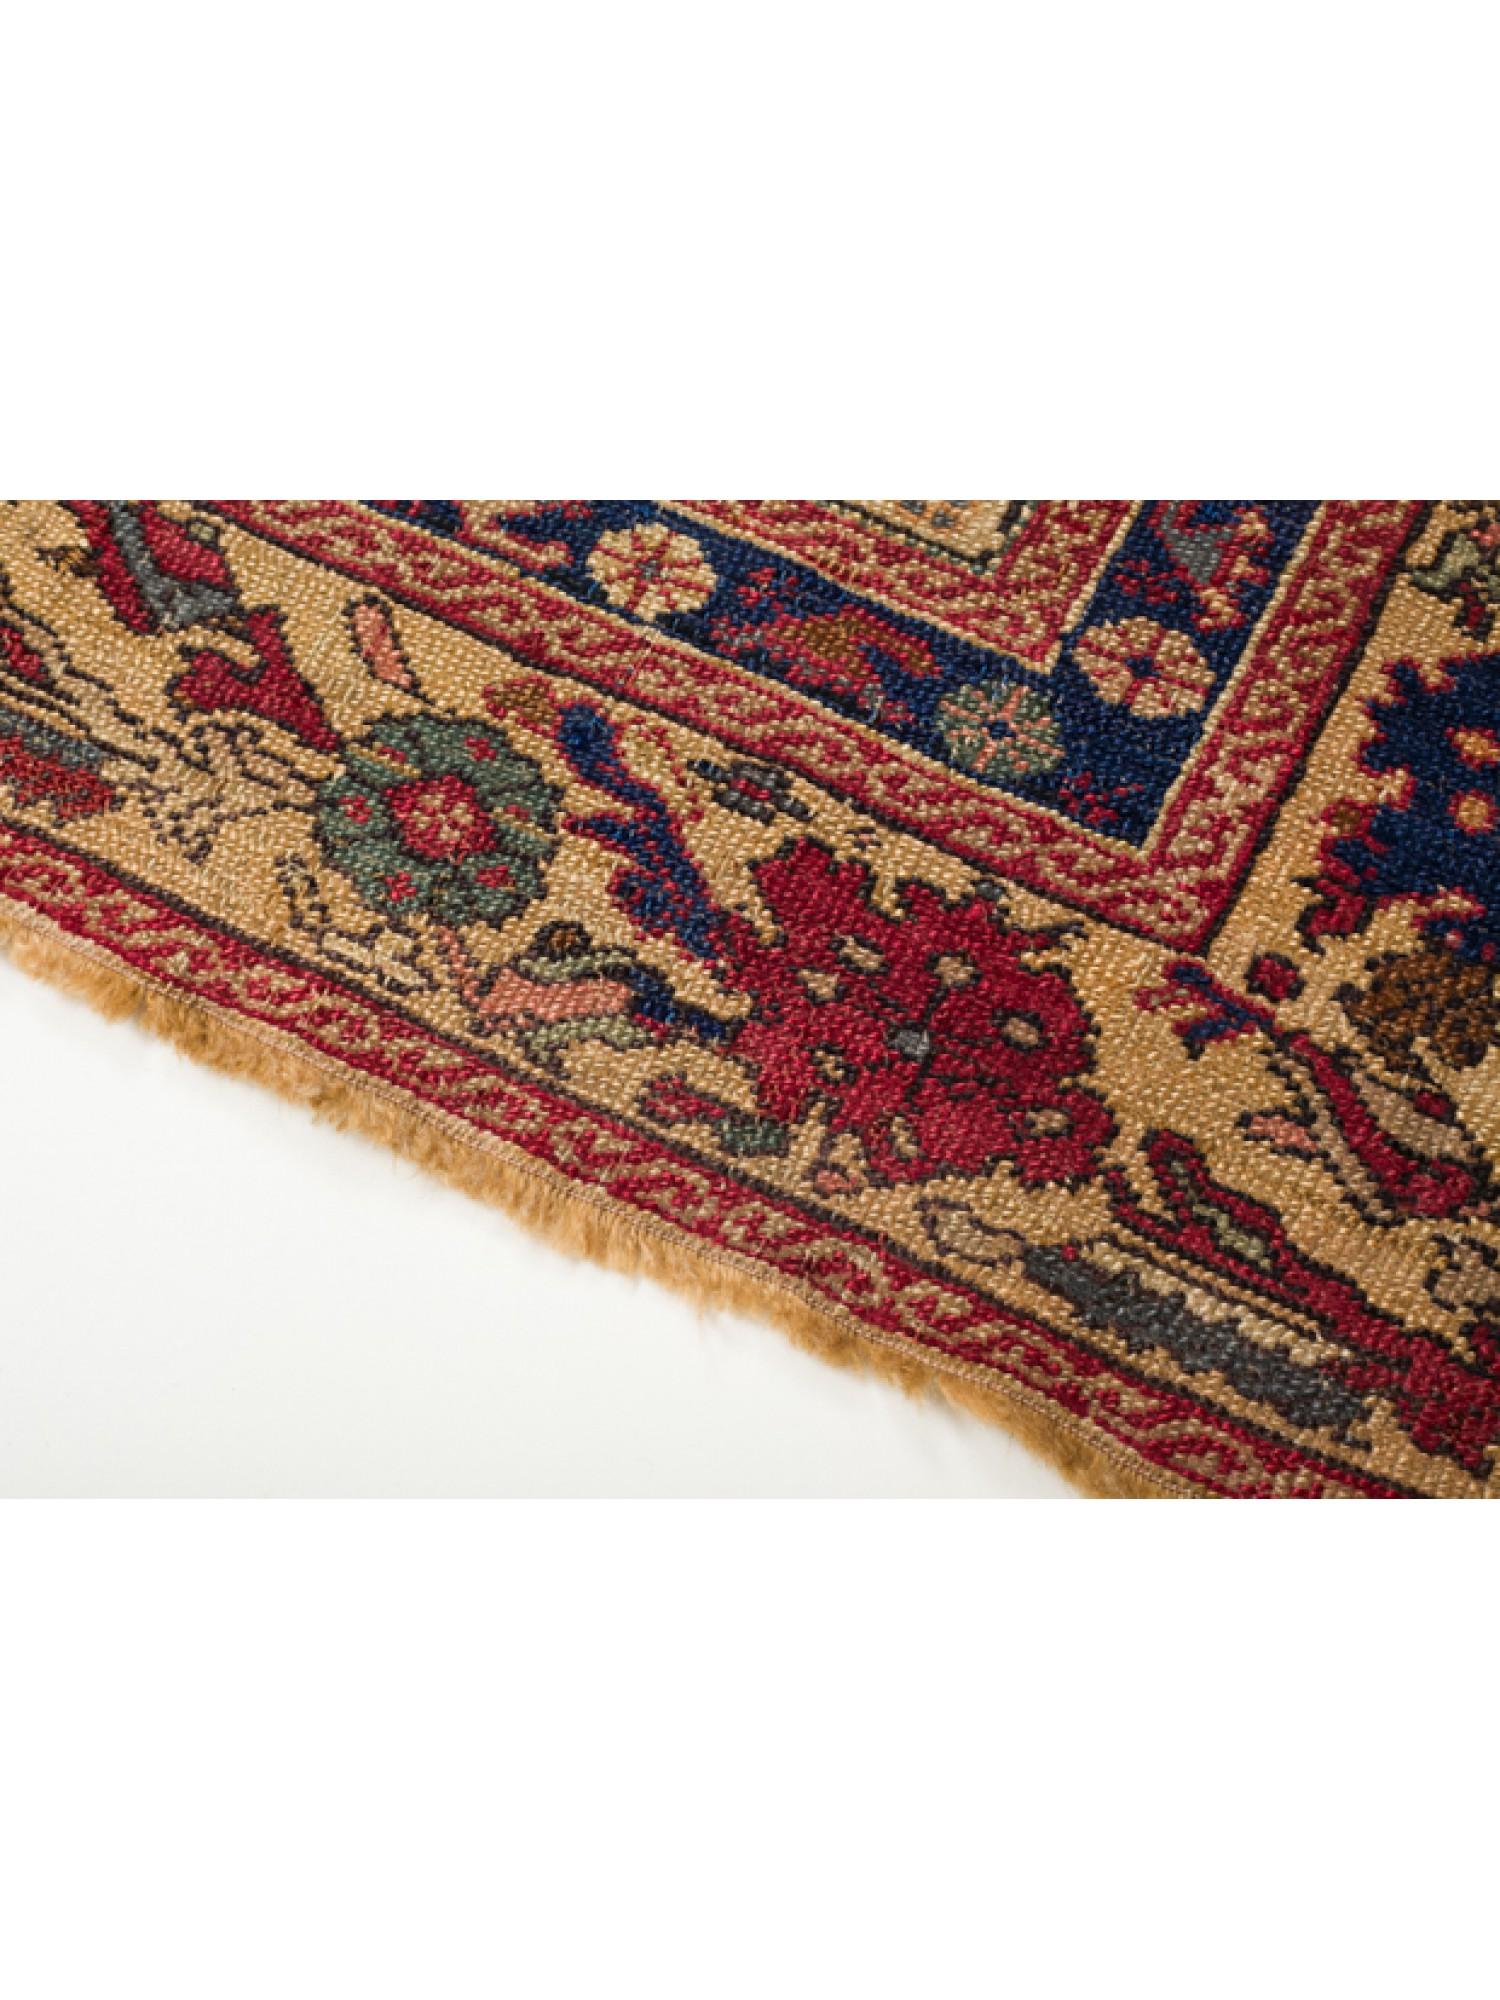 Antique Kula Prayer Rug Western Anatolian Turkish Mihrab Carpet Rare Design In Good Condition For Sale In Tokyo, JP